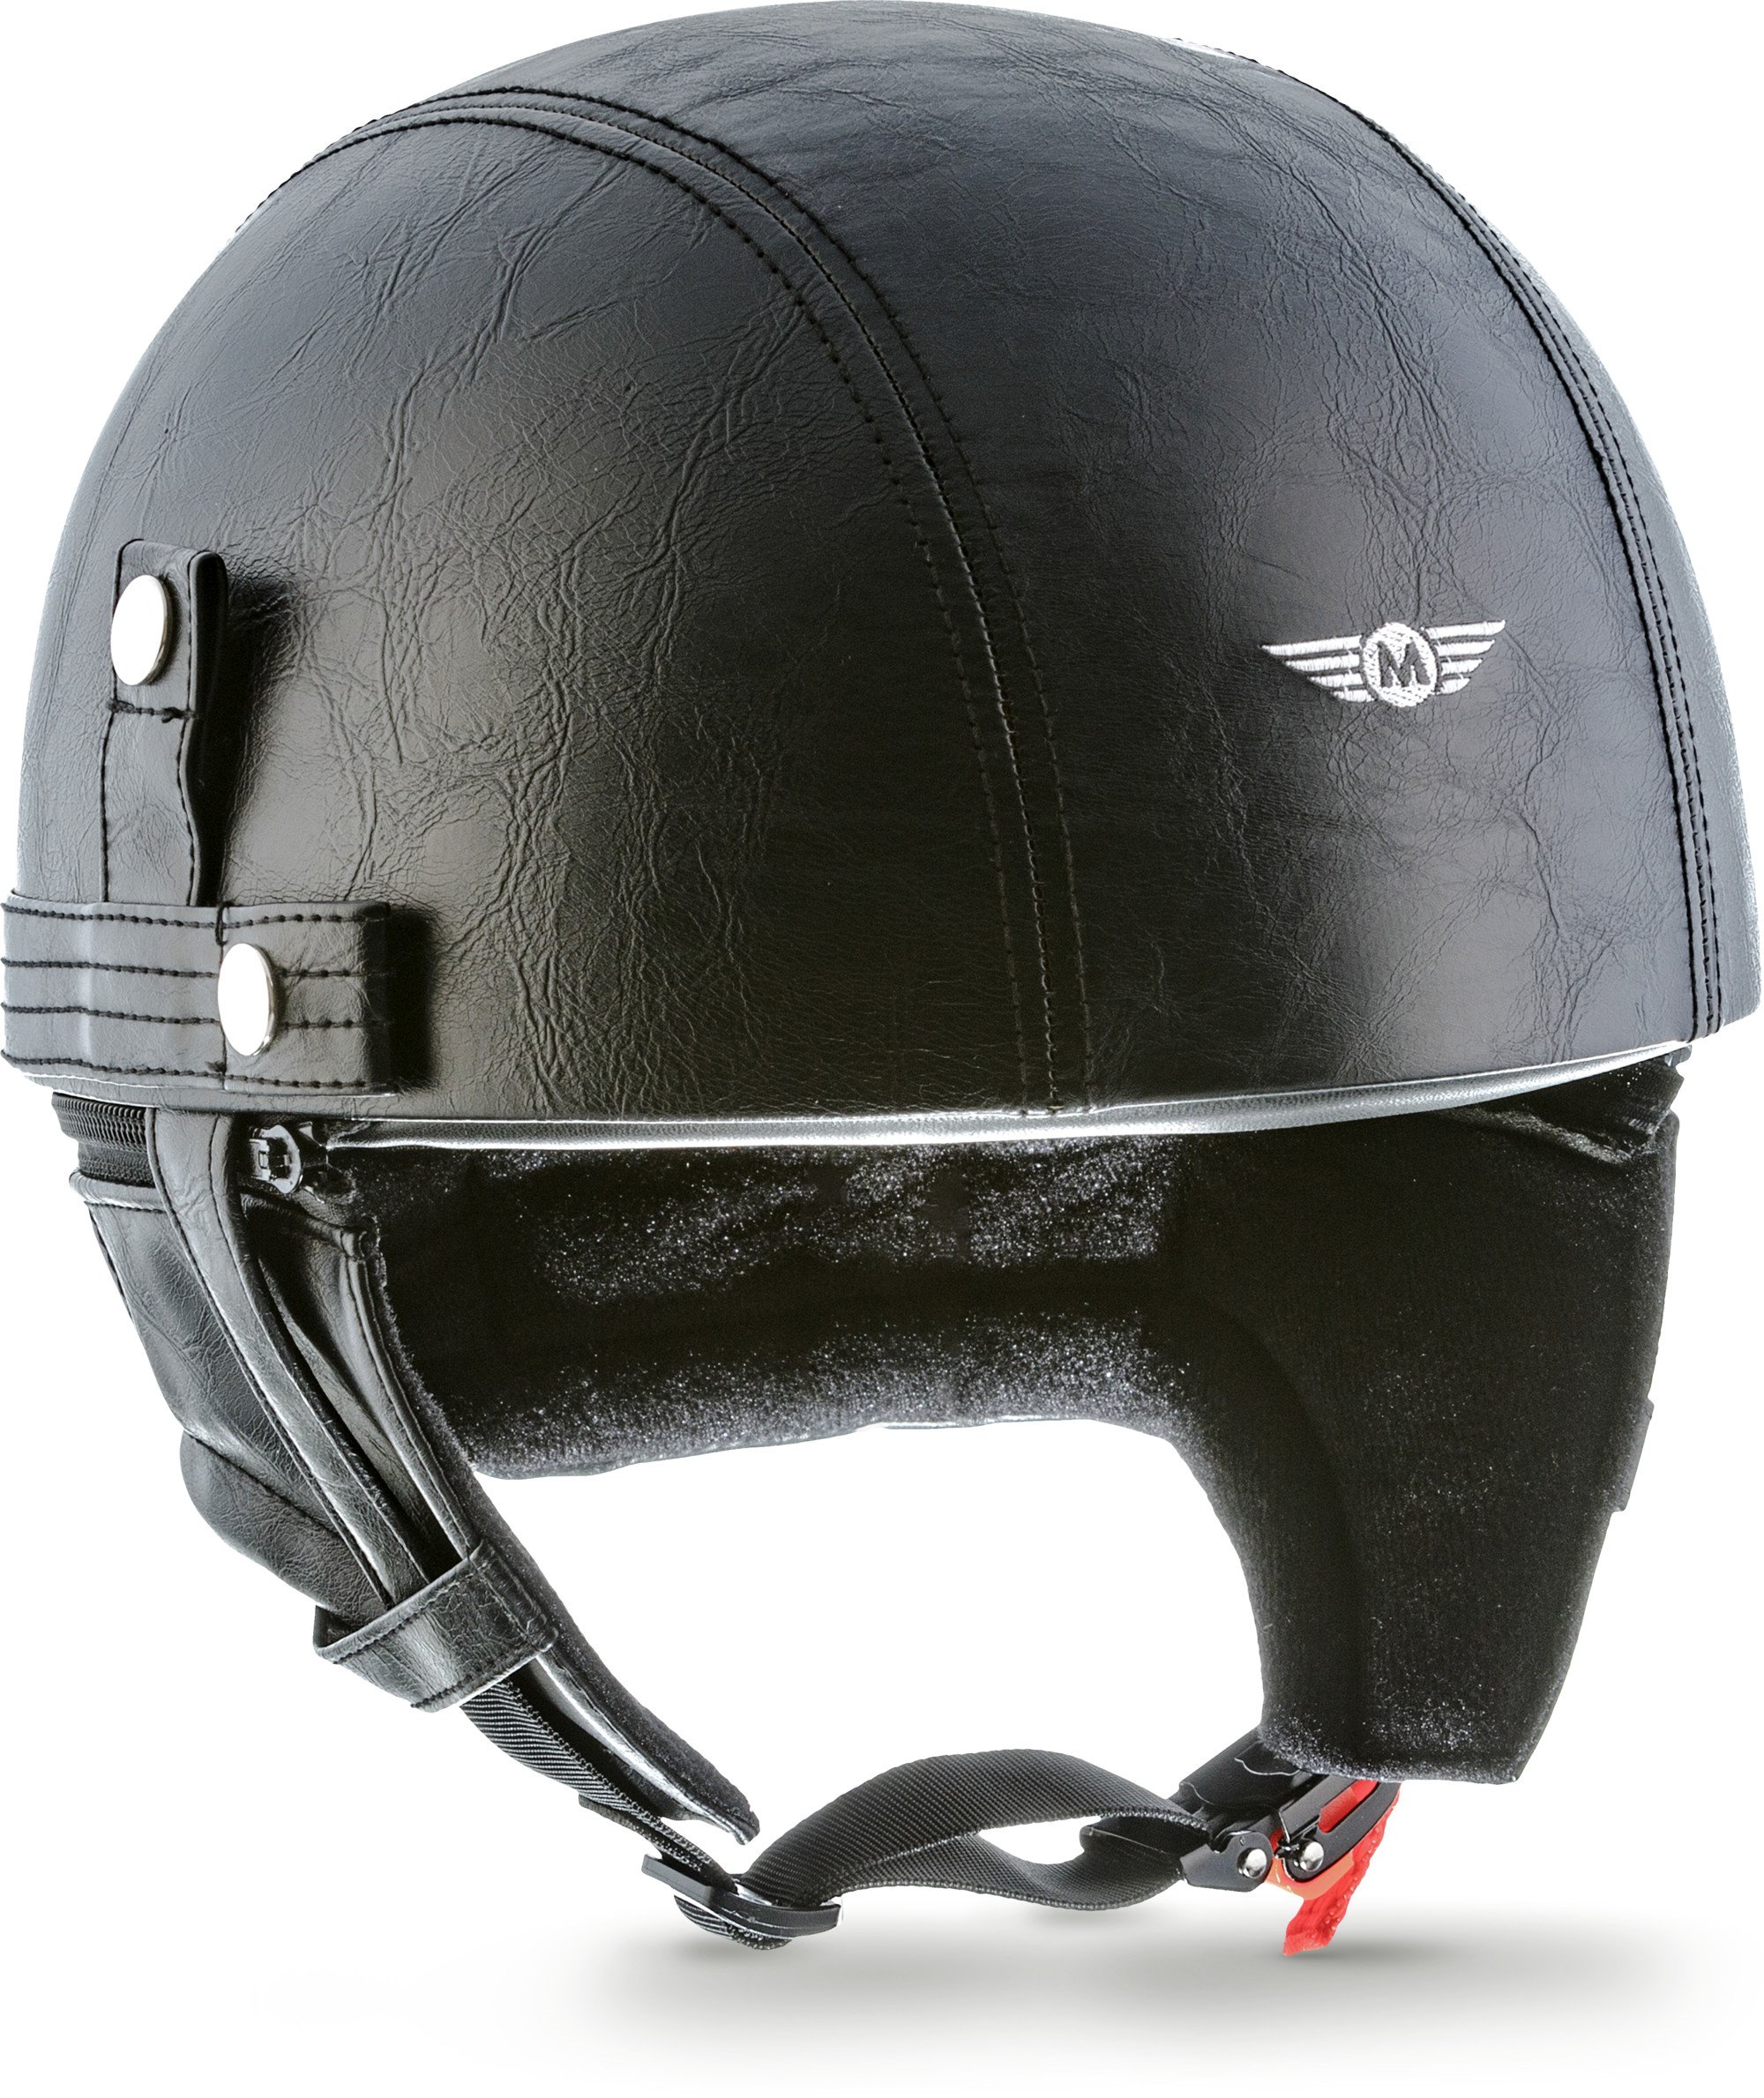 MOTO Helmets® D22 „Leather Black“ · Brain-Cap · Halbschale Jet-Helm Motorrad-Helm Bobber · Fiberglas Schnellverschluss SlimShell Tasche M (57-58cm)